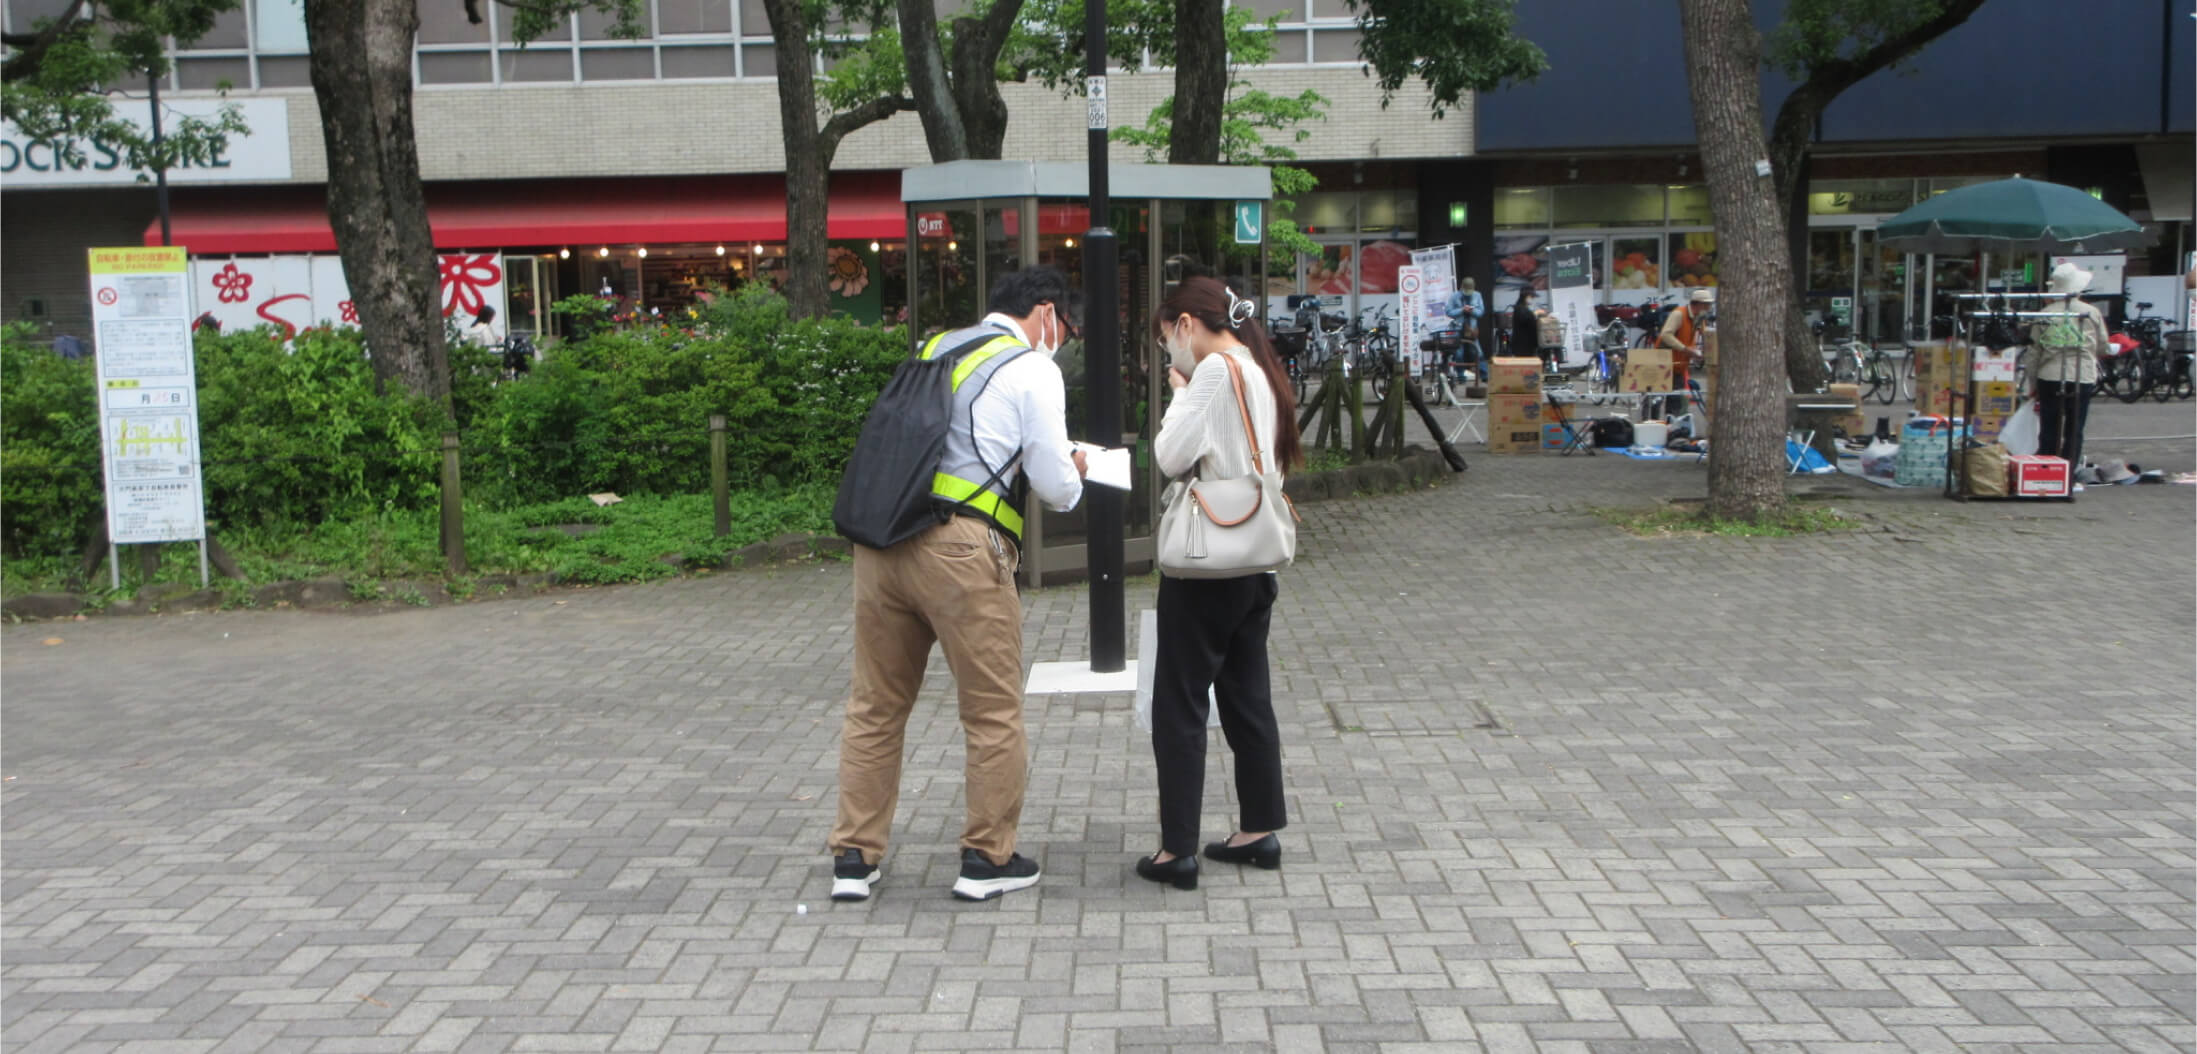 picture: A man conducts a survey of event participants